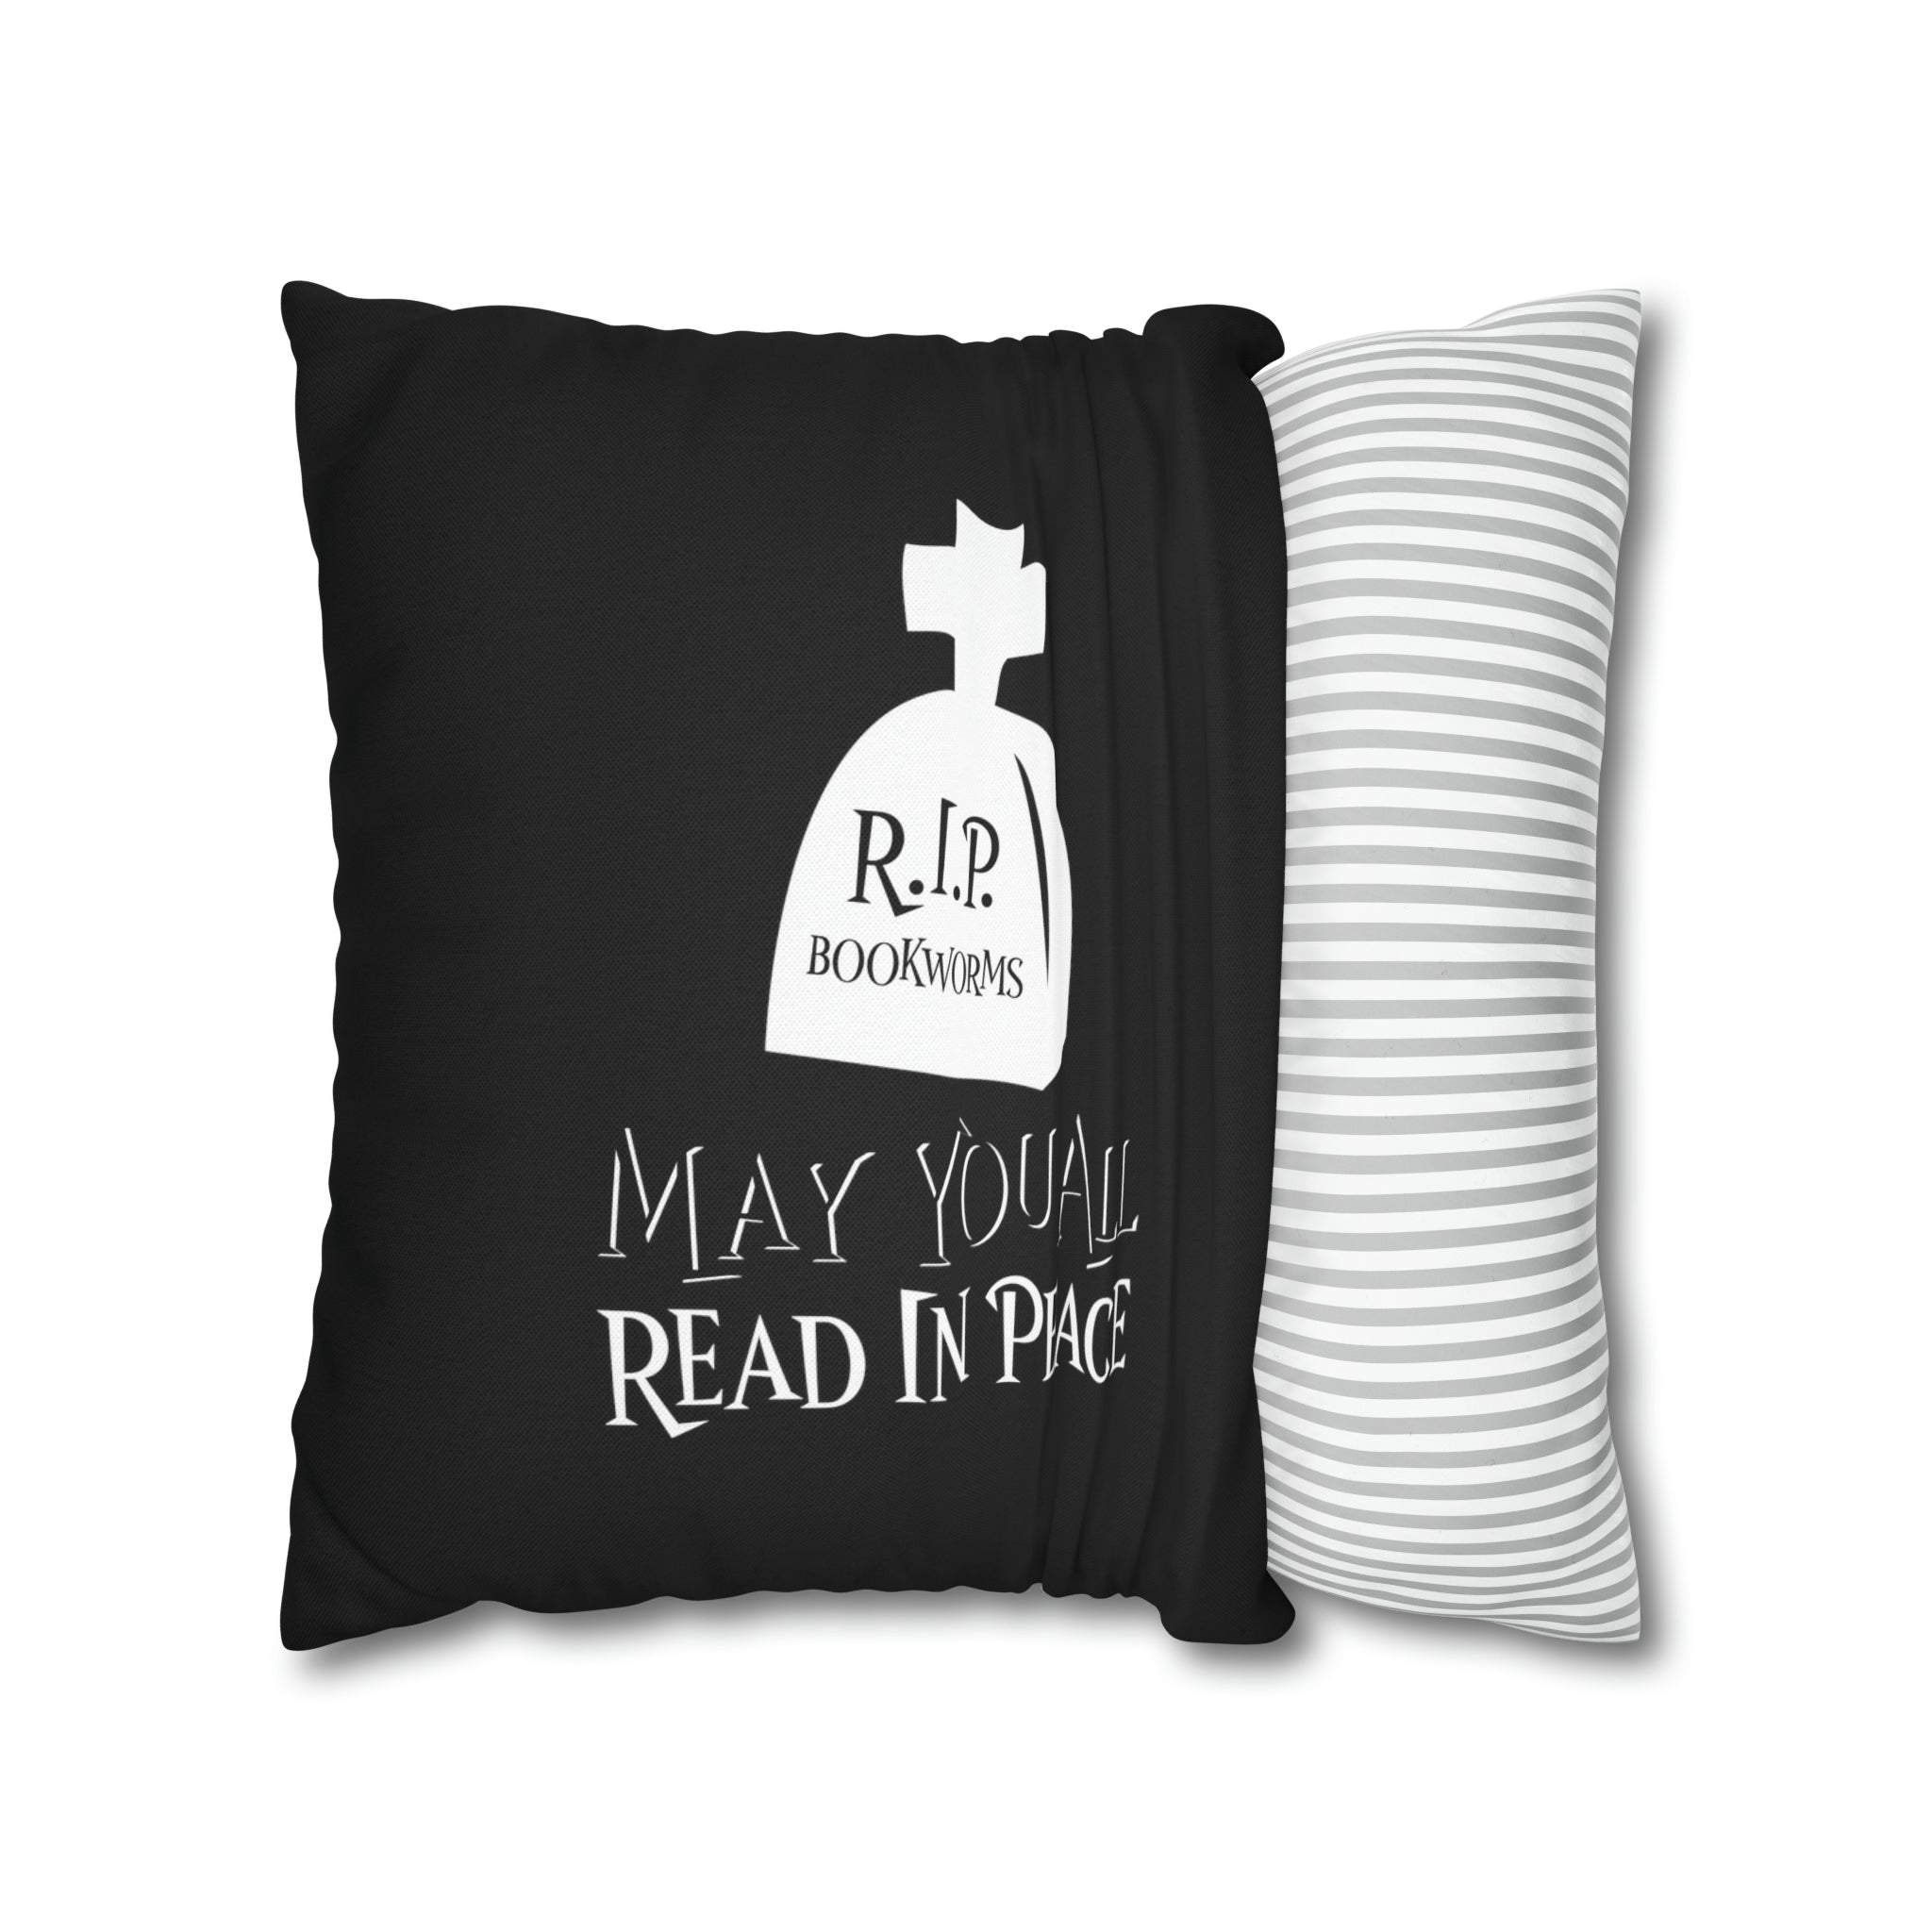 R.I.P. BOOKWORMS Pillow